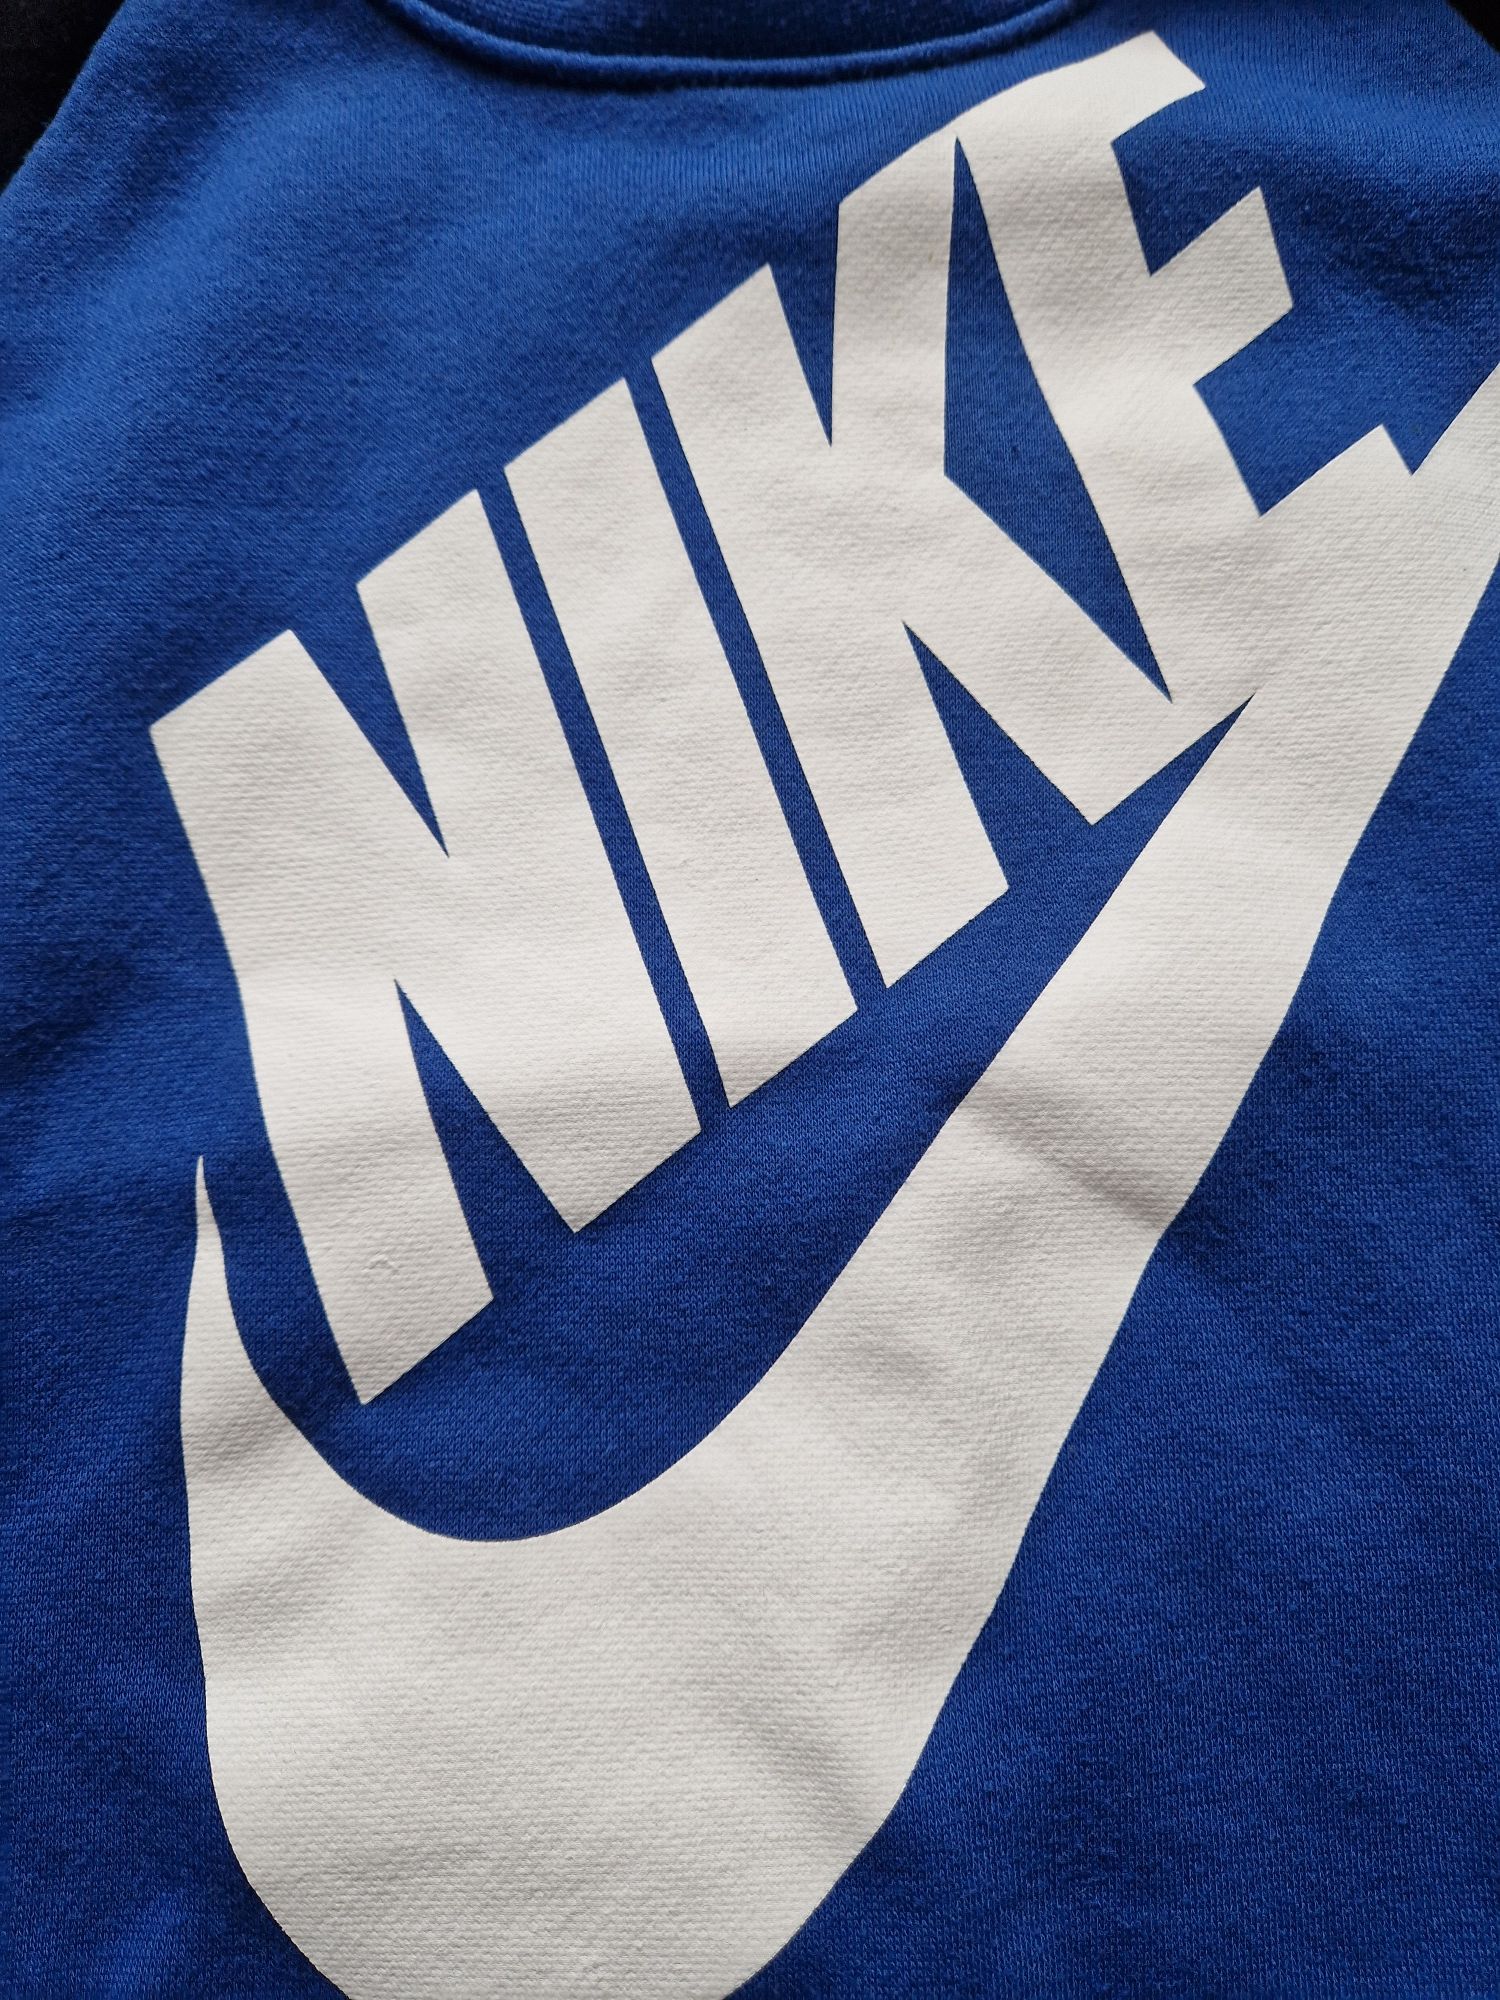 Bluza Nike orginalna